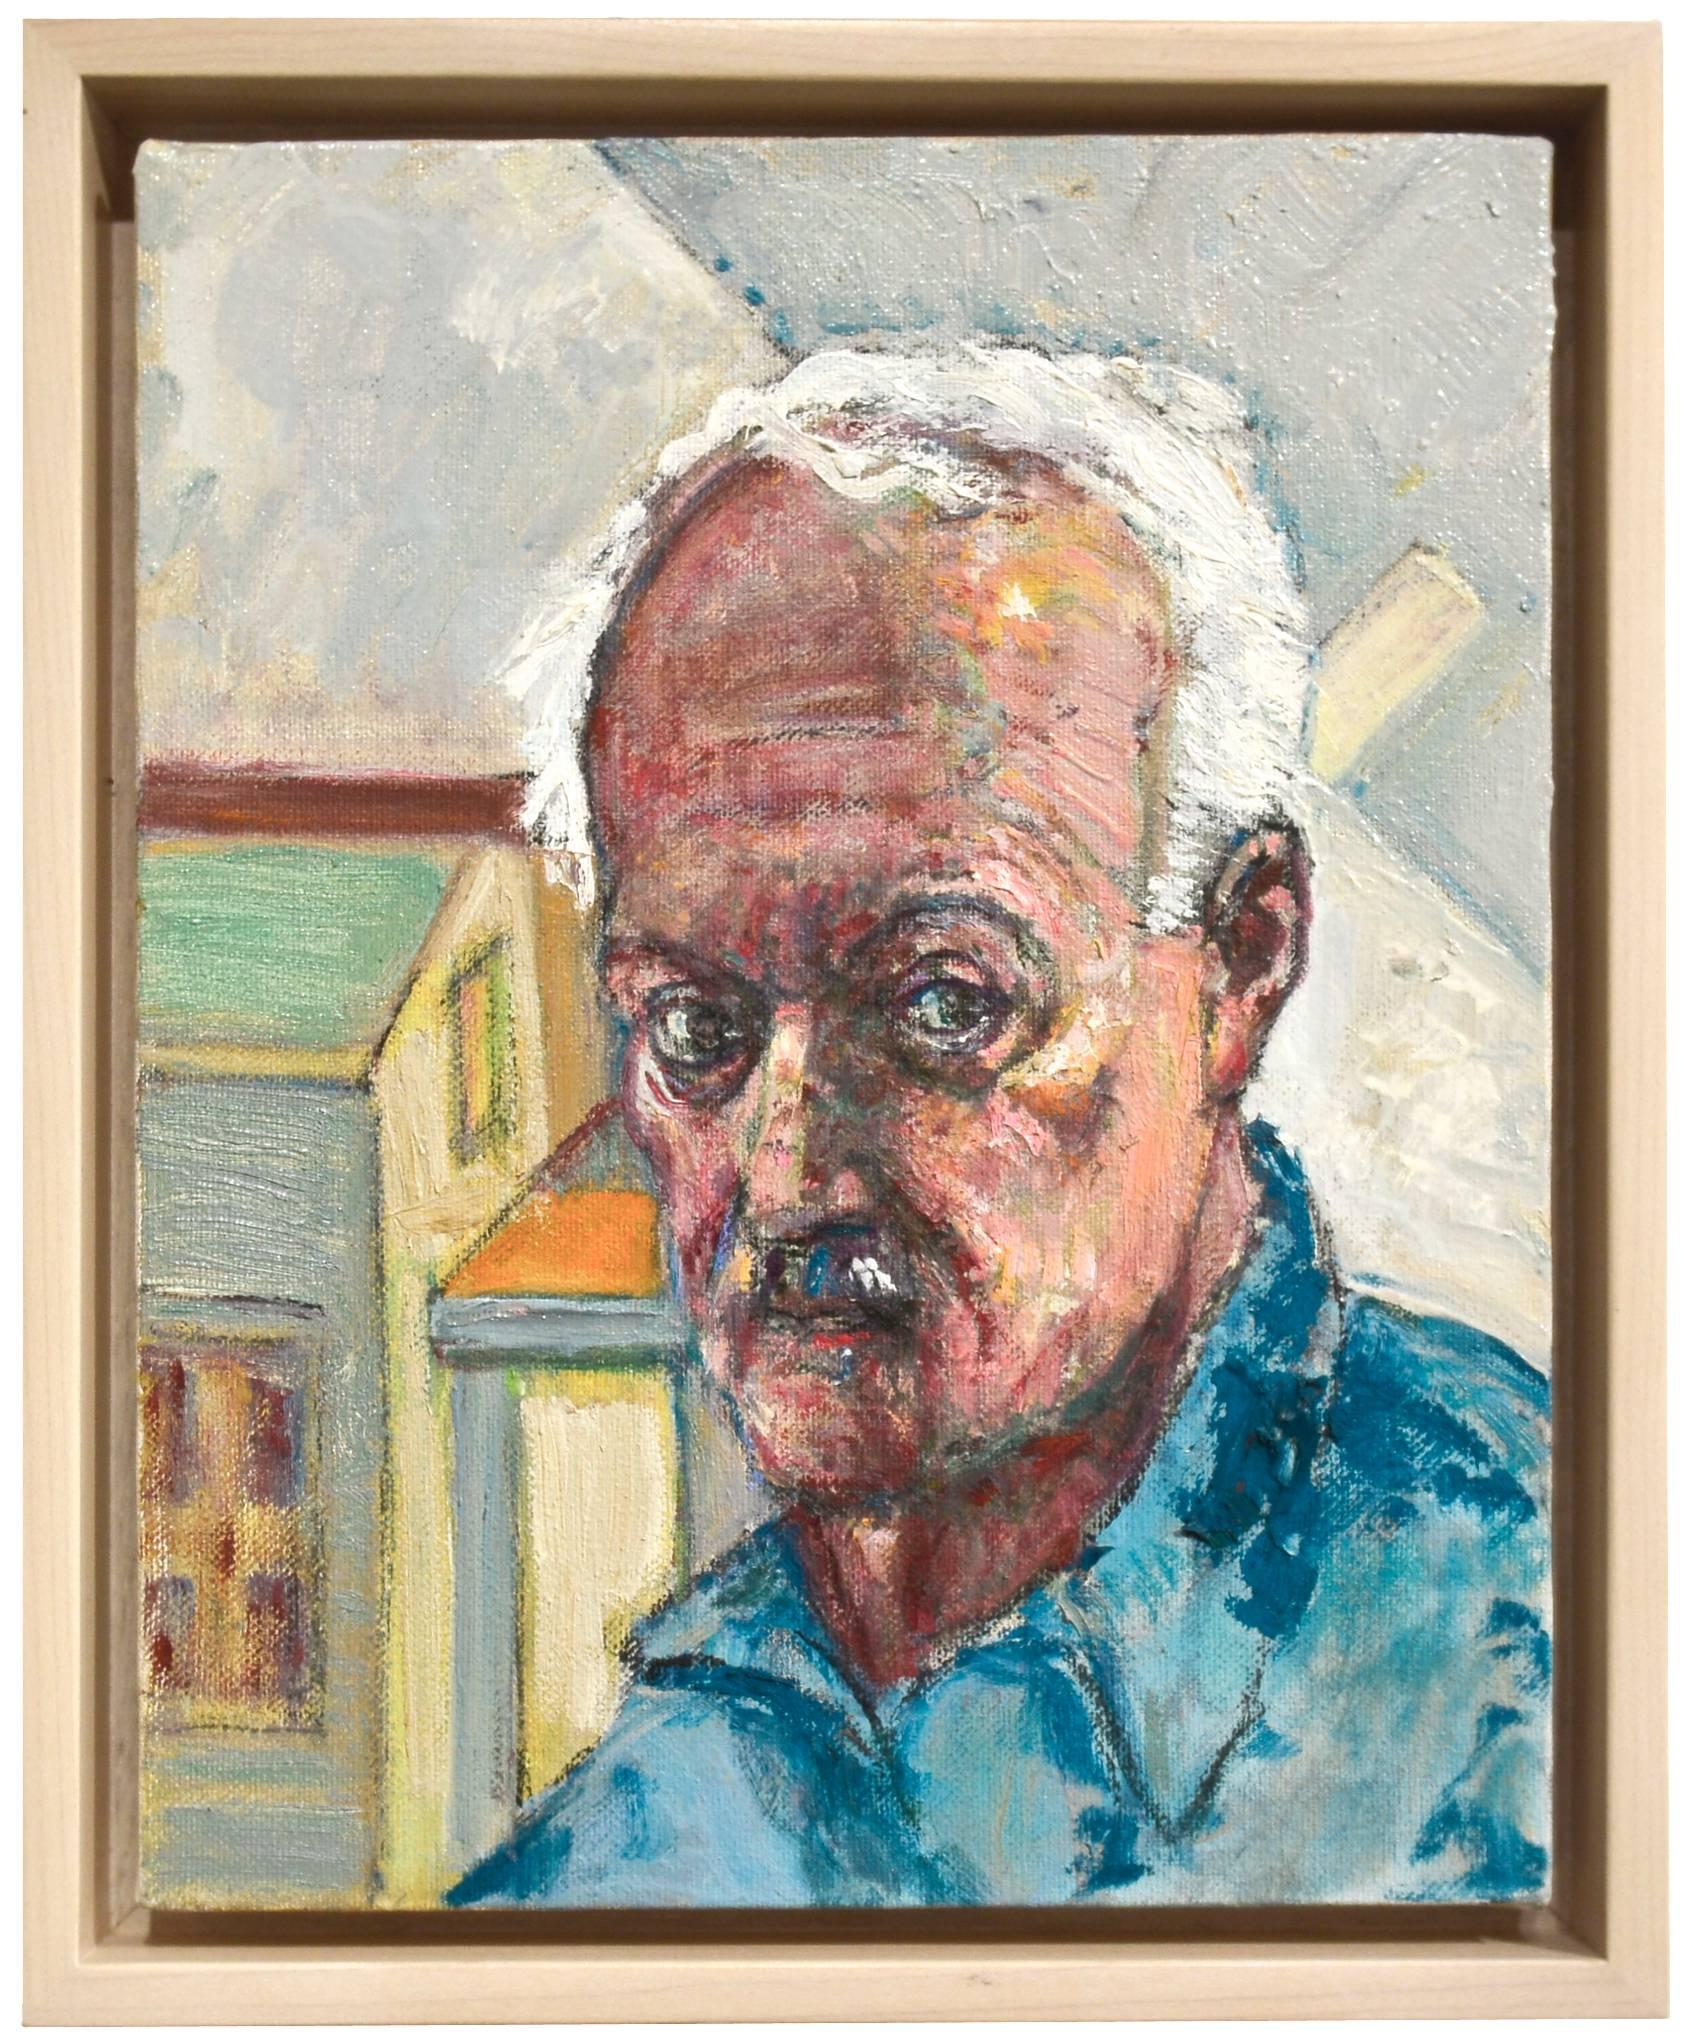 Self Portrait - Painting by Bernard Chaet